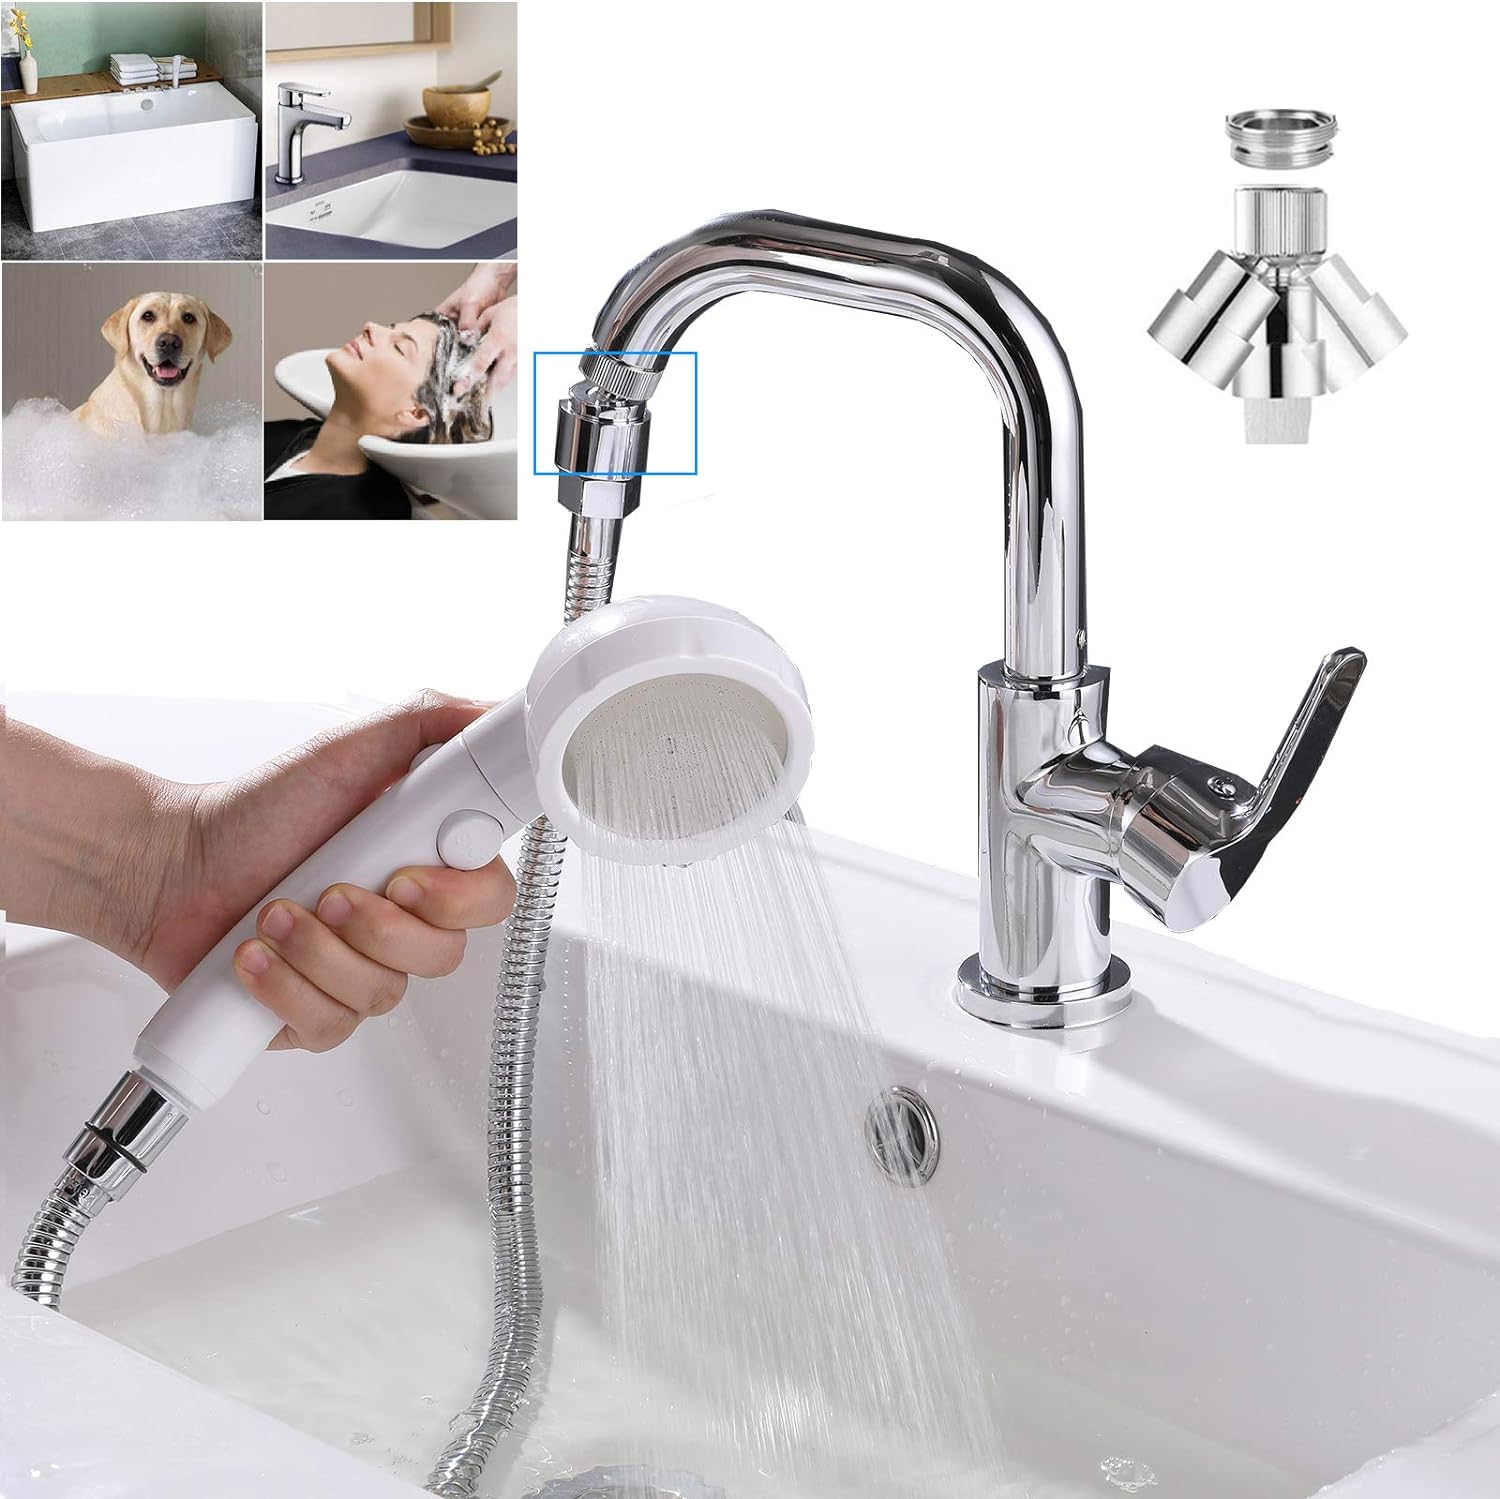 Qmlala Shower Adapter For Tub Faucet, Bathtub Hose Adapter